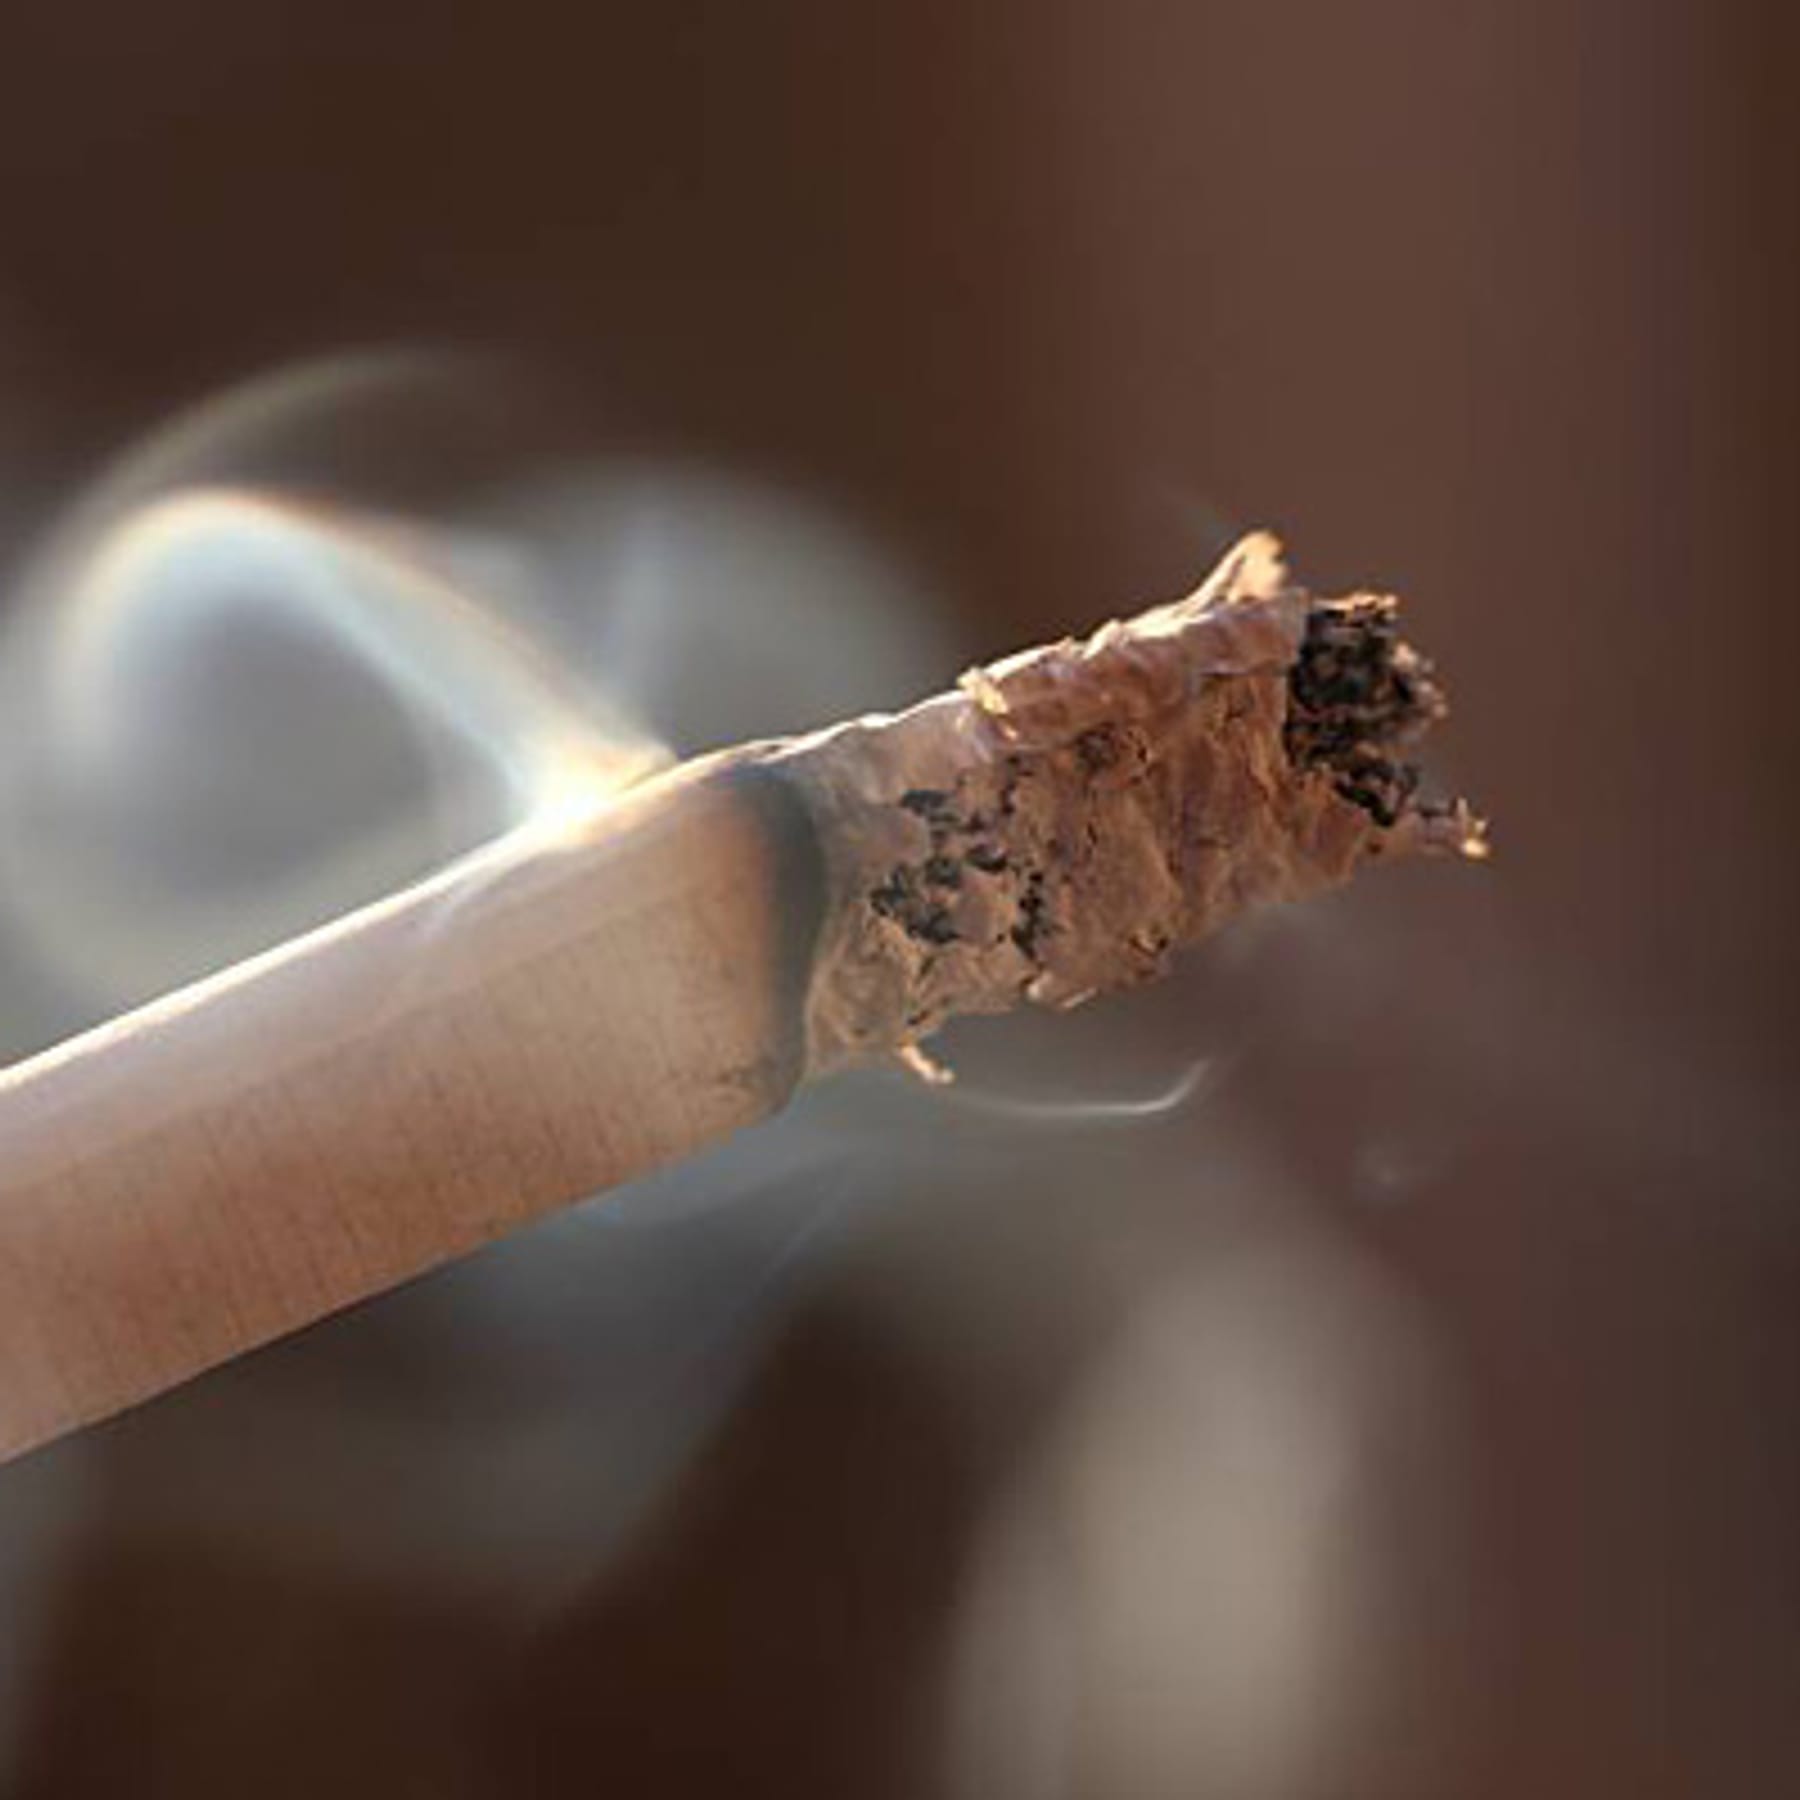 Pflaster drauf – Zigarette ade?